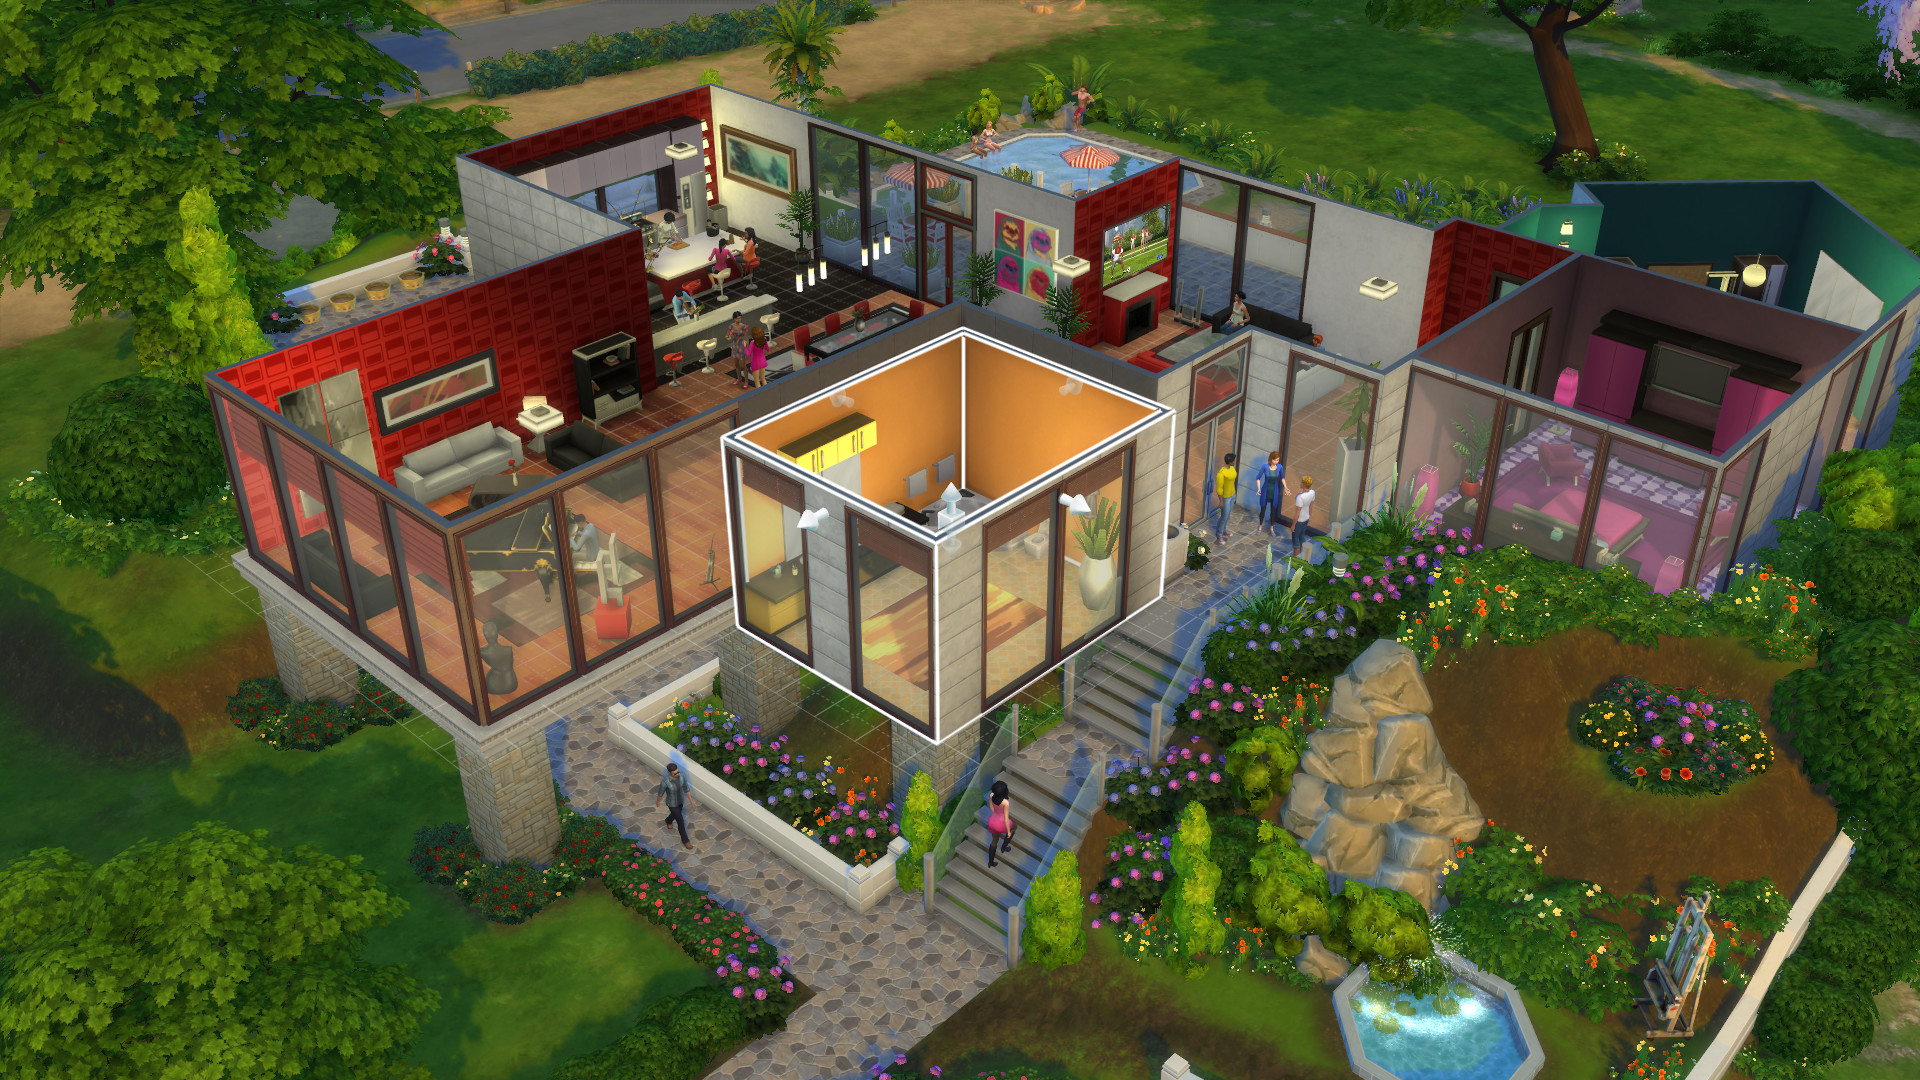 The Sims 4 screenshot 2